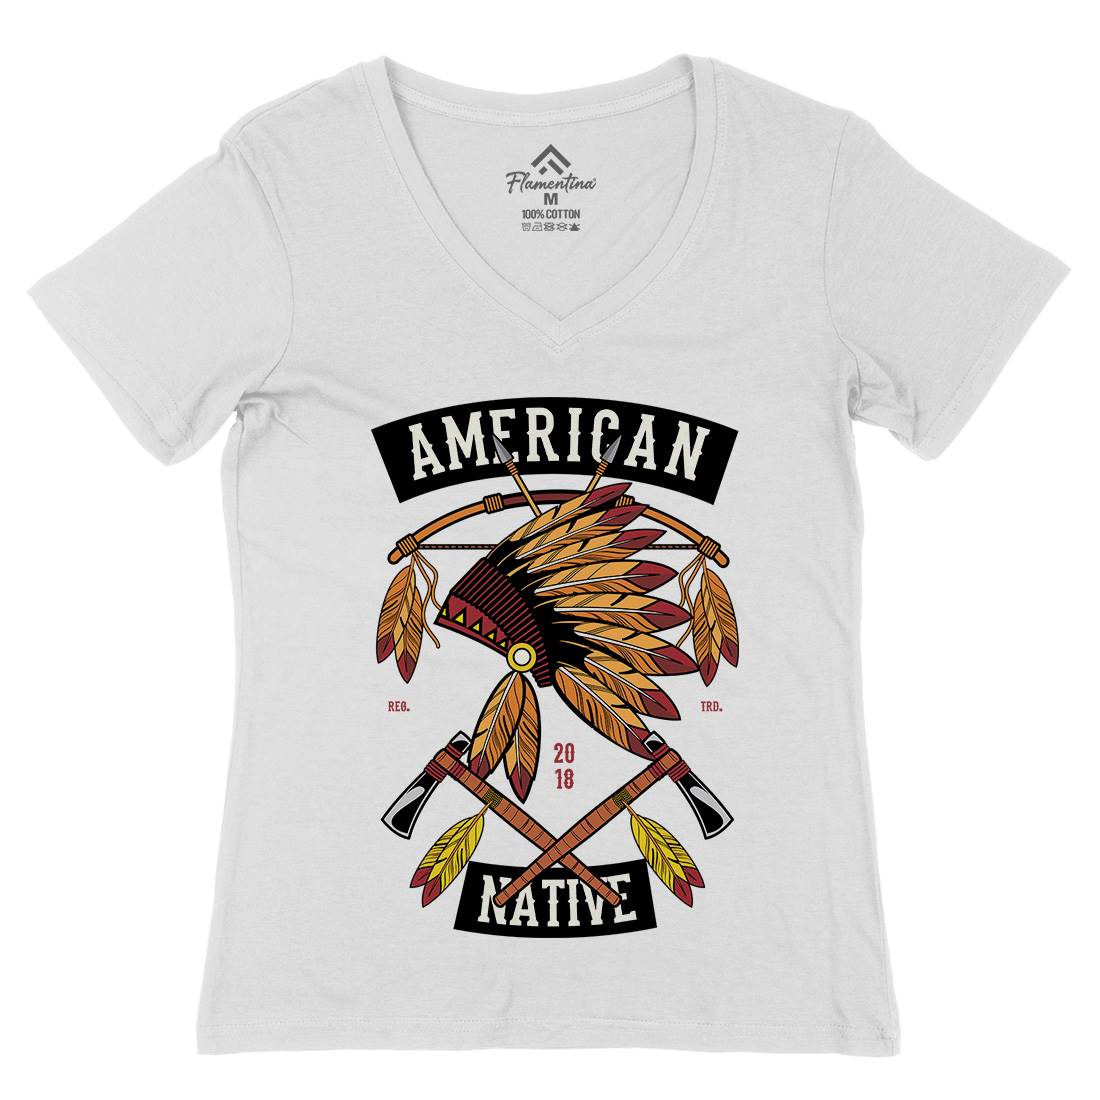 American Native Womens Organic V-Neck T-Shirt American C303